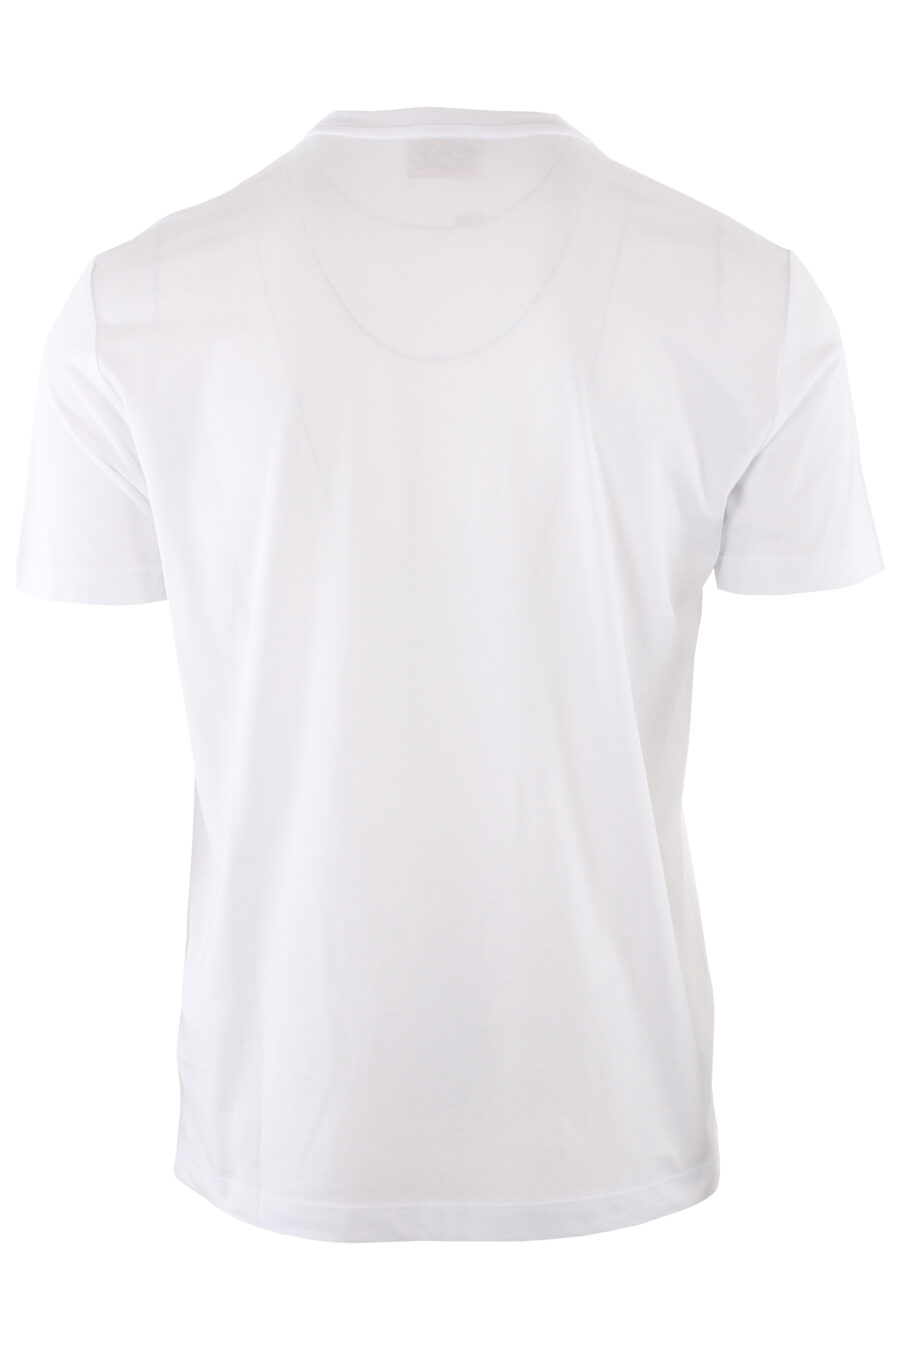 Camiseta blanca con logo dorado "lux identity" - IMG 7417